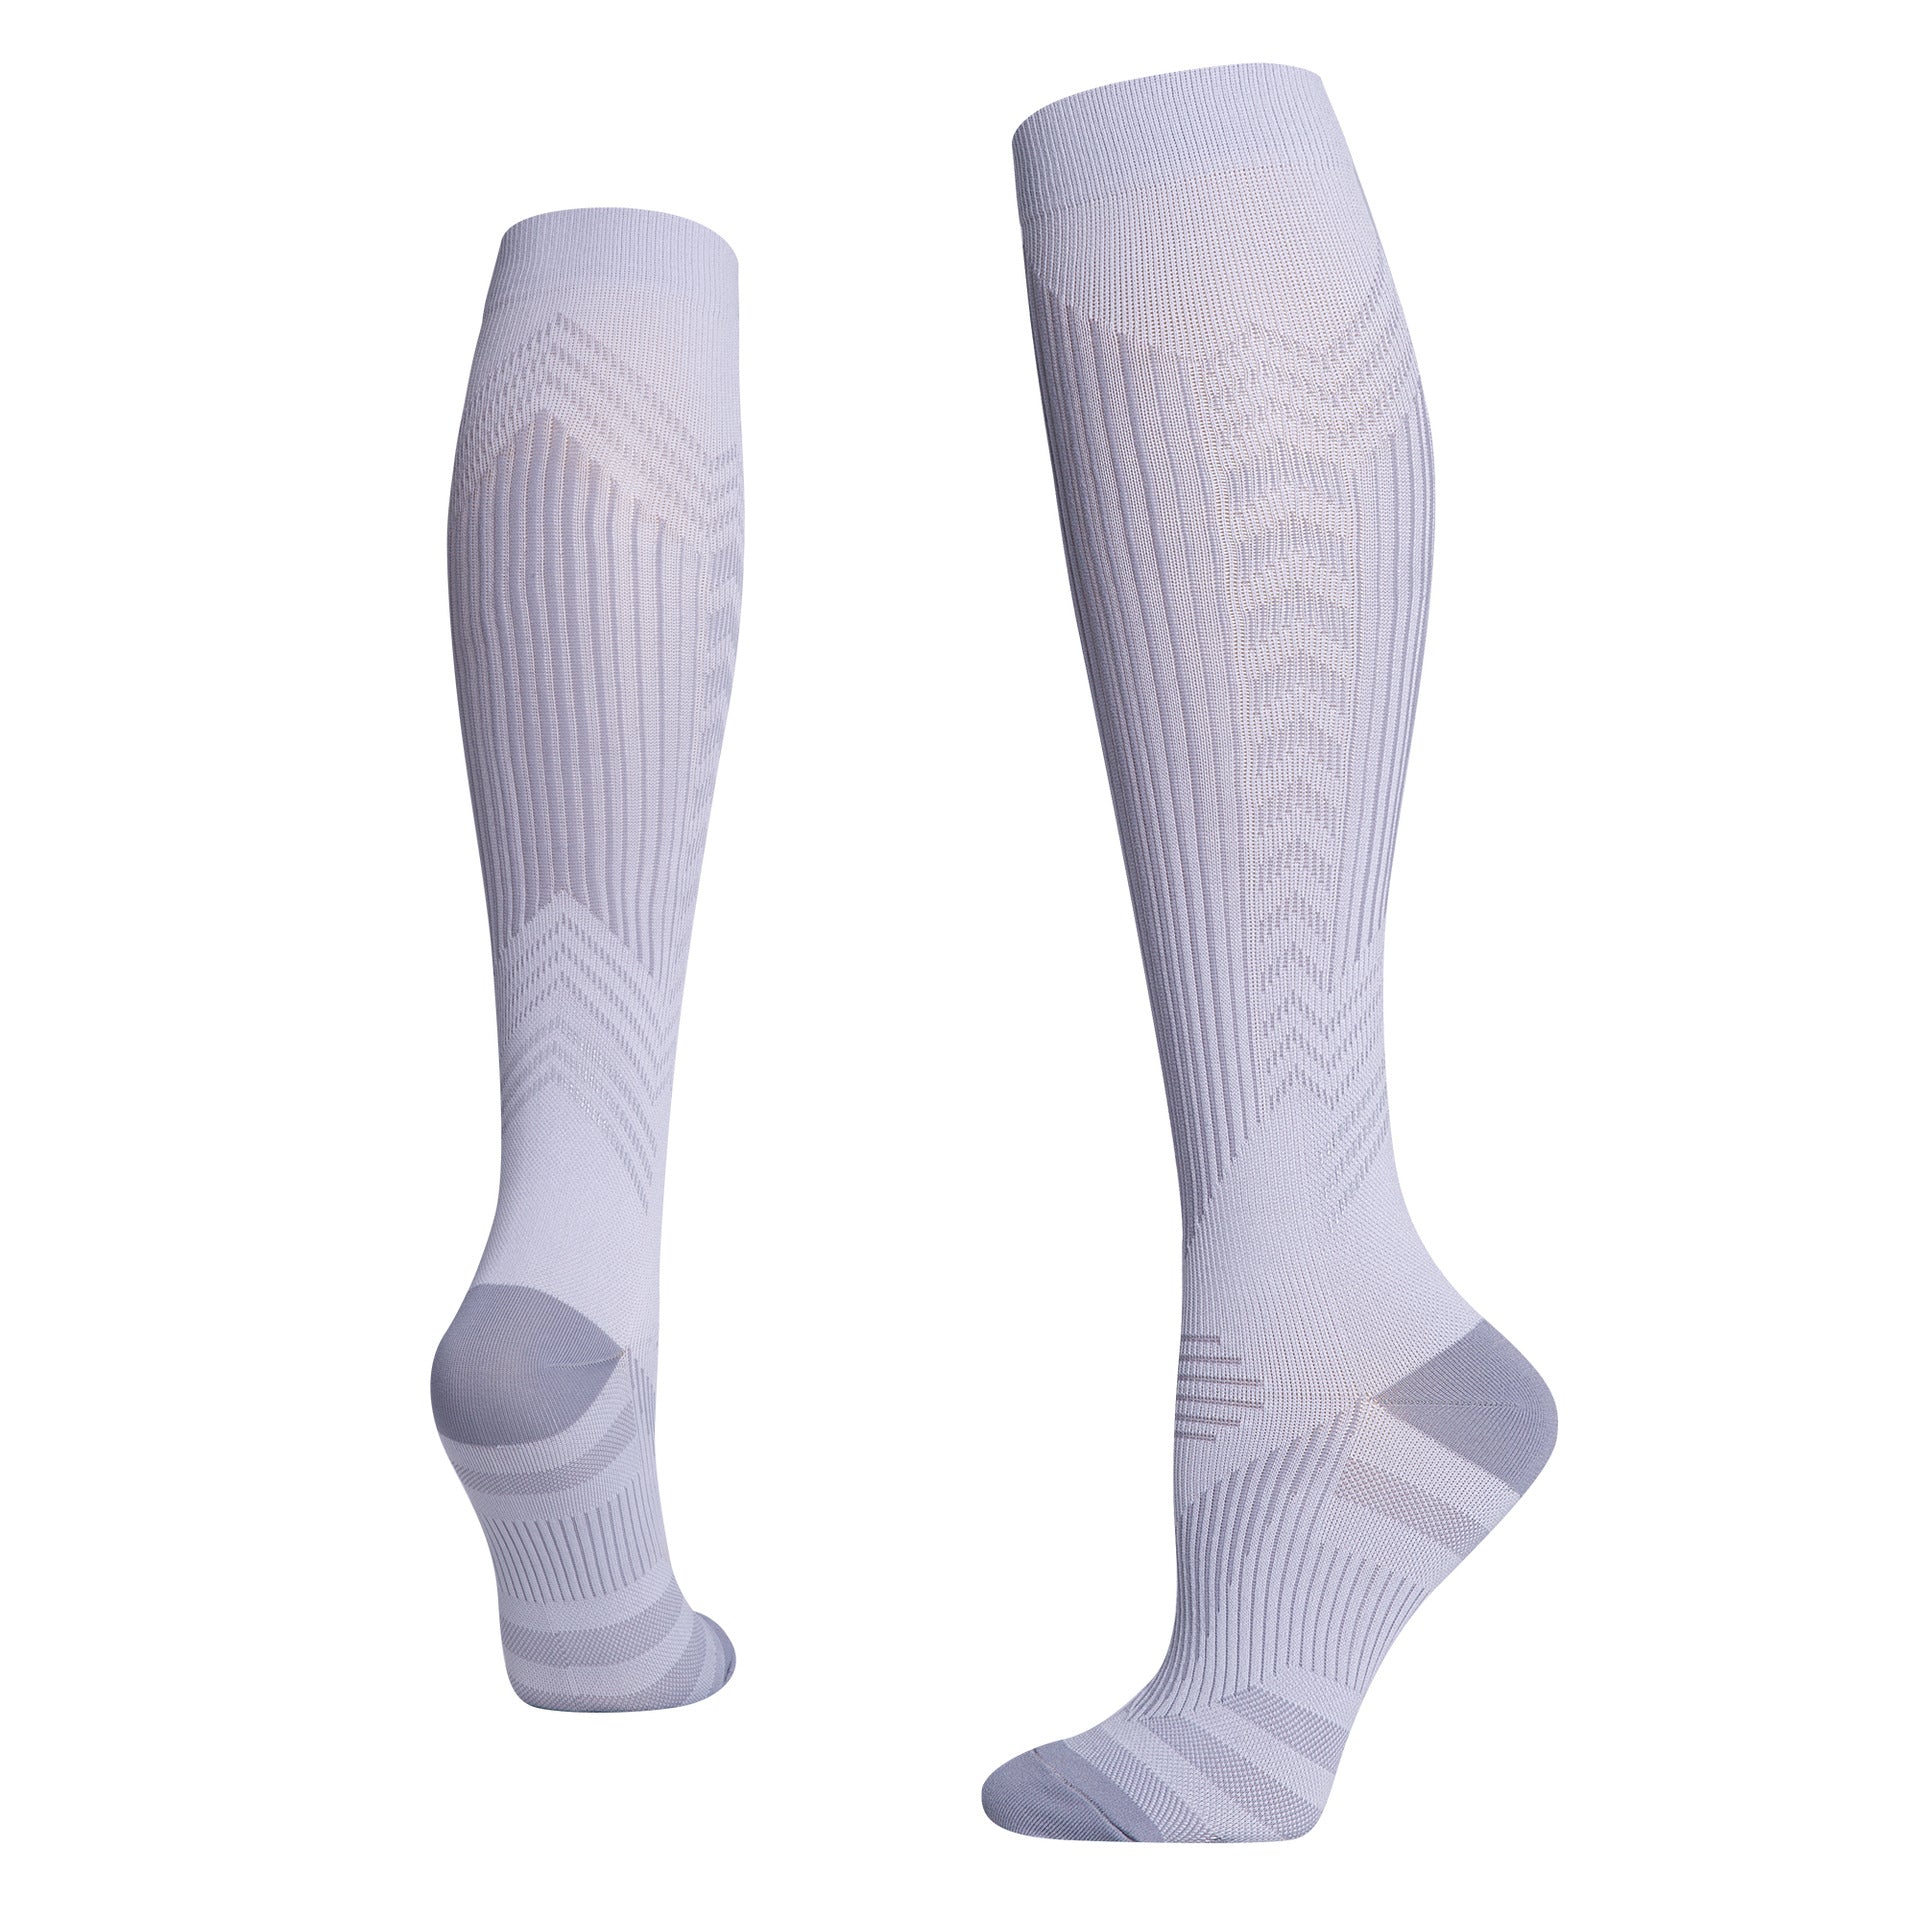 Compression Socks Reflective Circulation 20-30 mmHg Knee High Graduated Medical Compression Socks